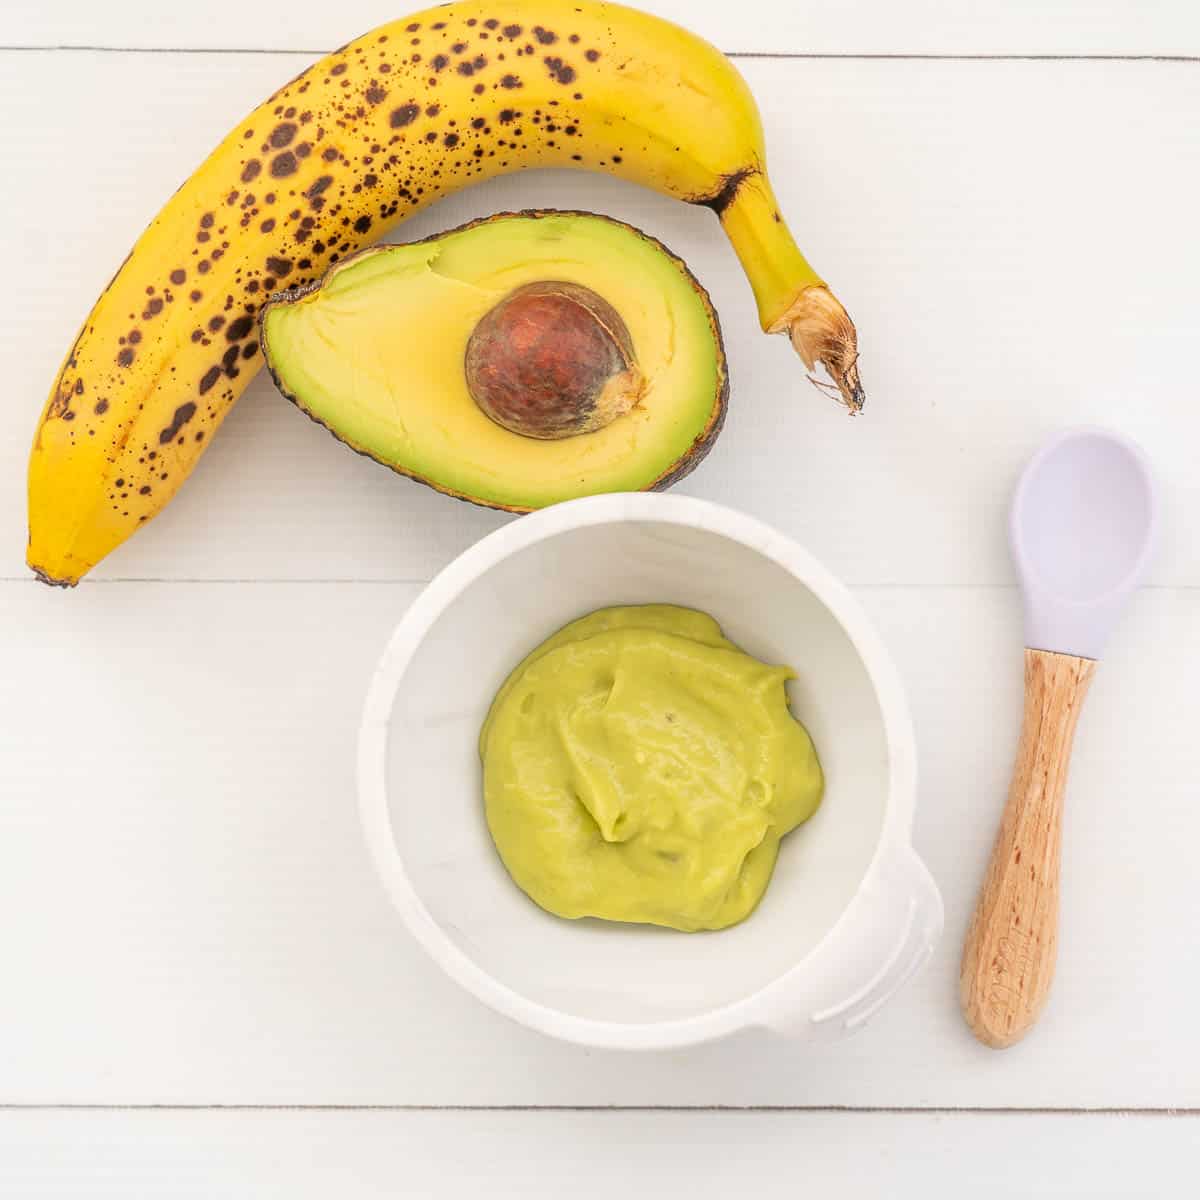 smooth green avocado baby food in a white baby bowl next to a banana and avocado